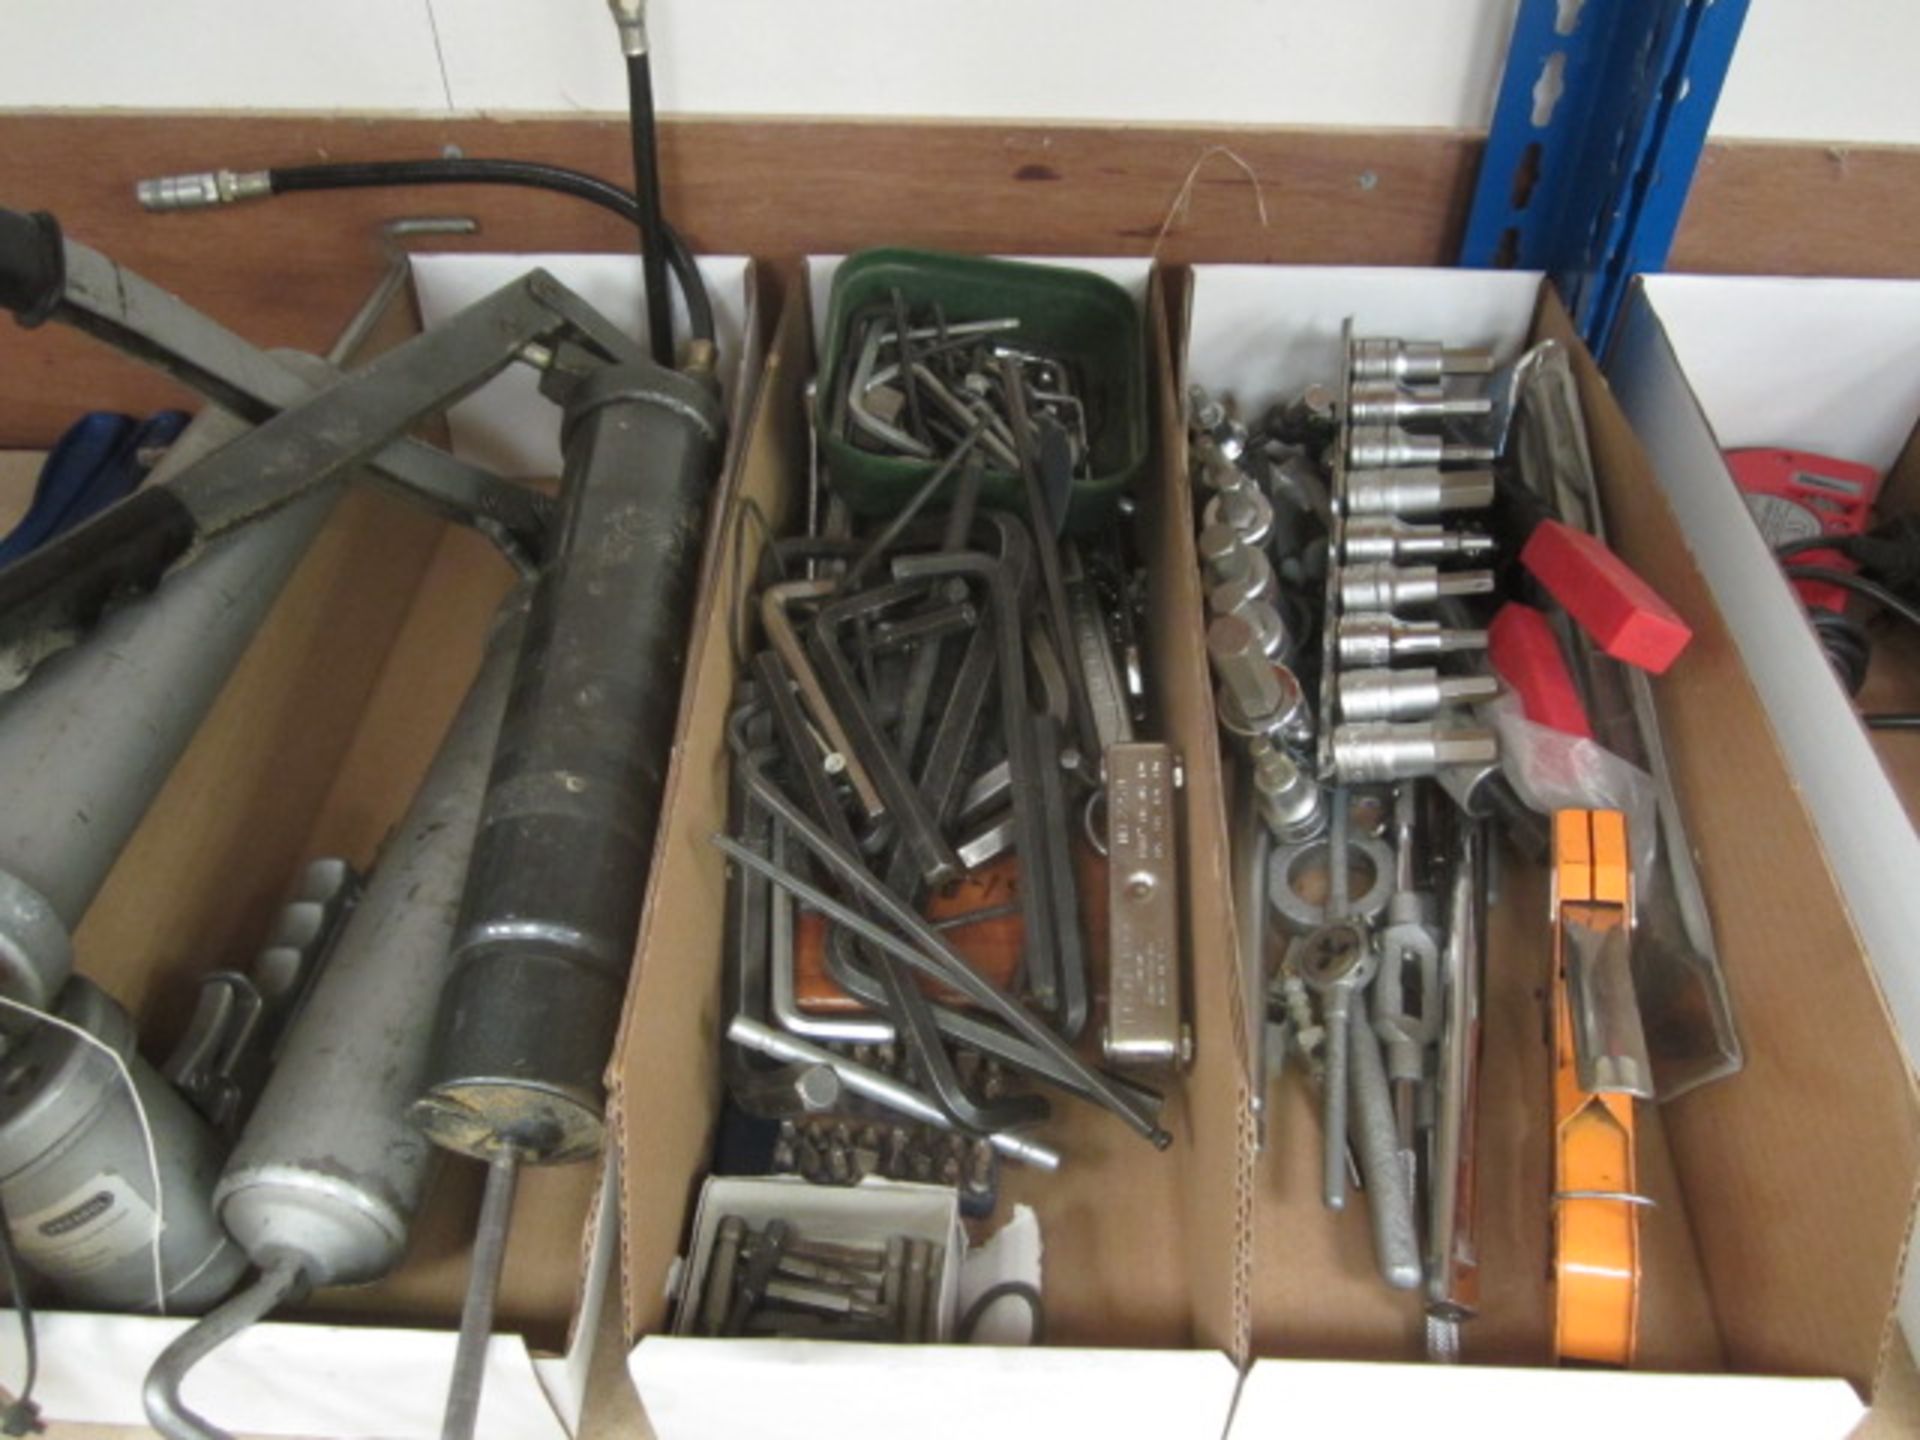 Quantity of assorted hand tools including allen keys, screwdrivers, socket sets, solder iron, - Image 2 of 3